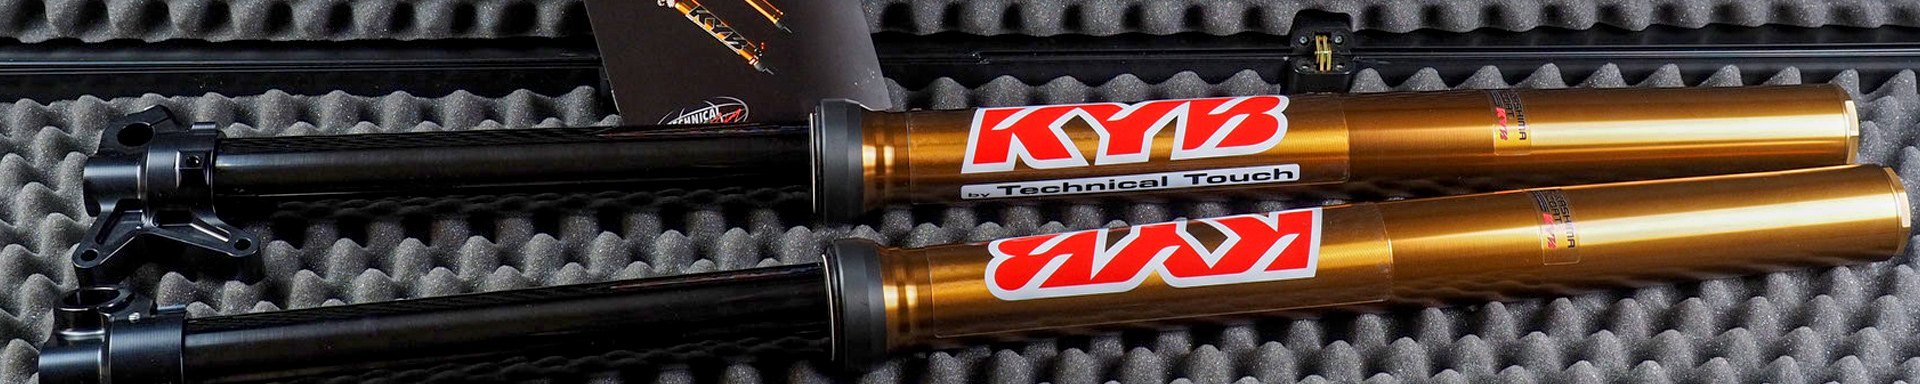 KYB™ | Shock Absorbers, Forks, Springs, Motorcycle Suspension Parts